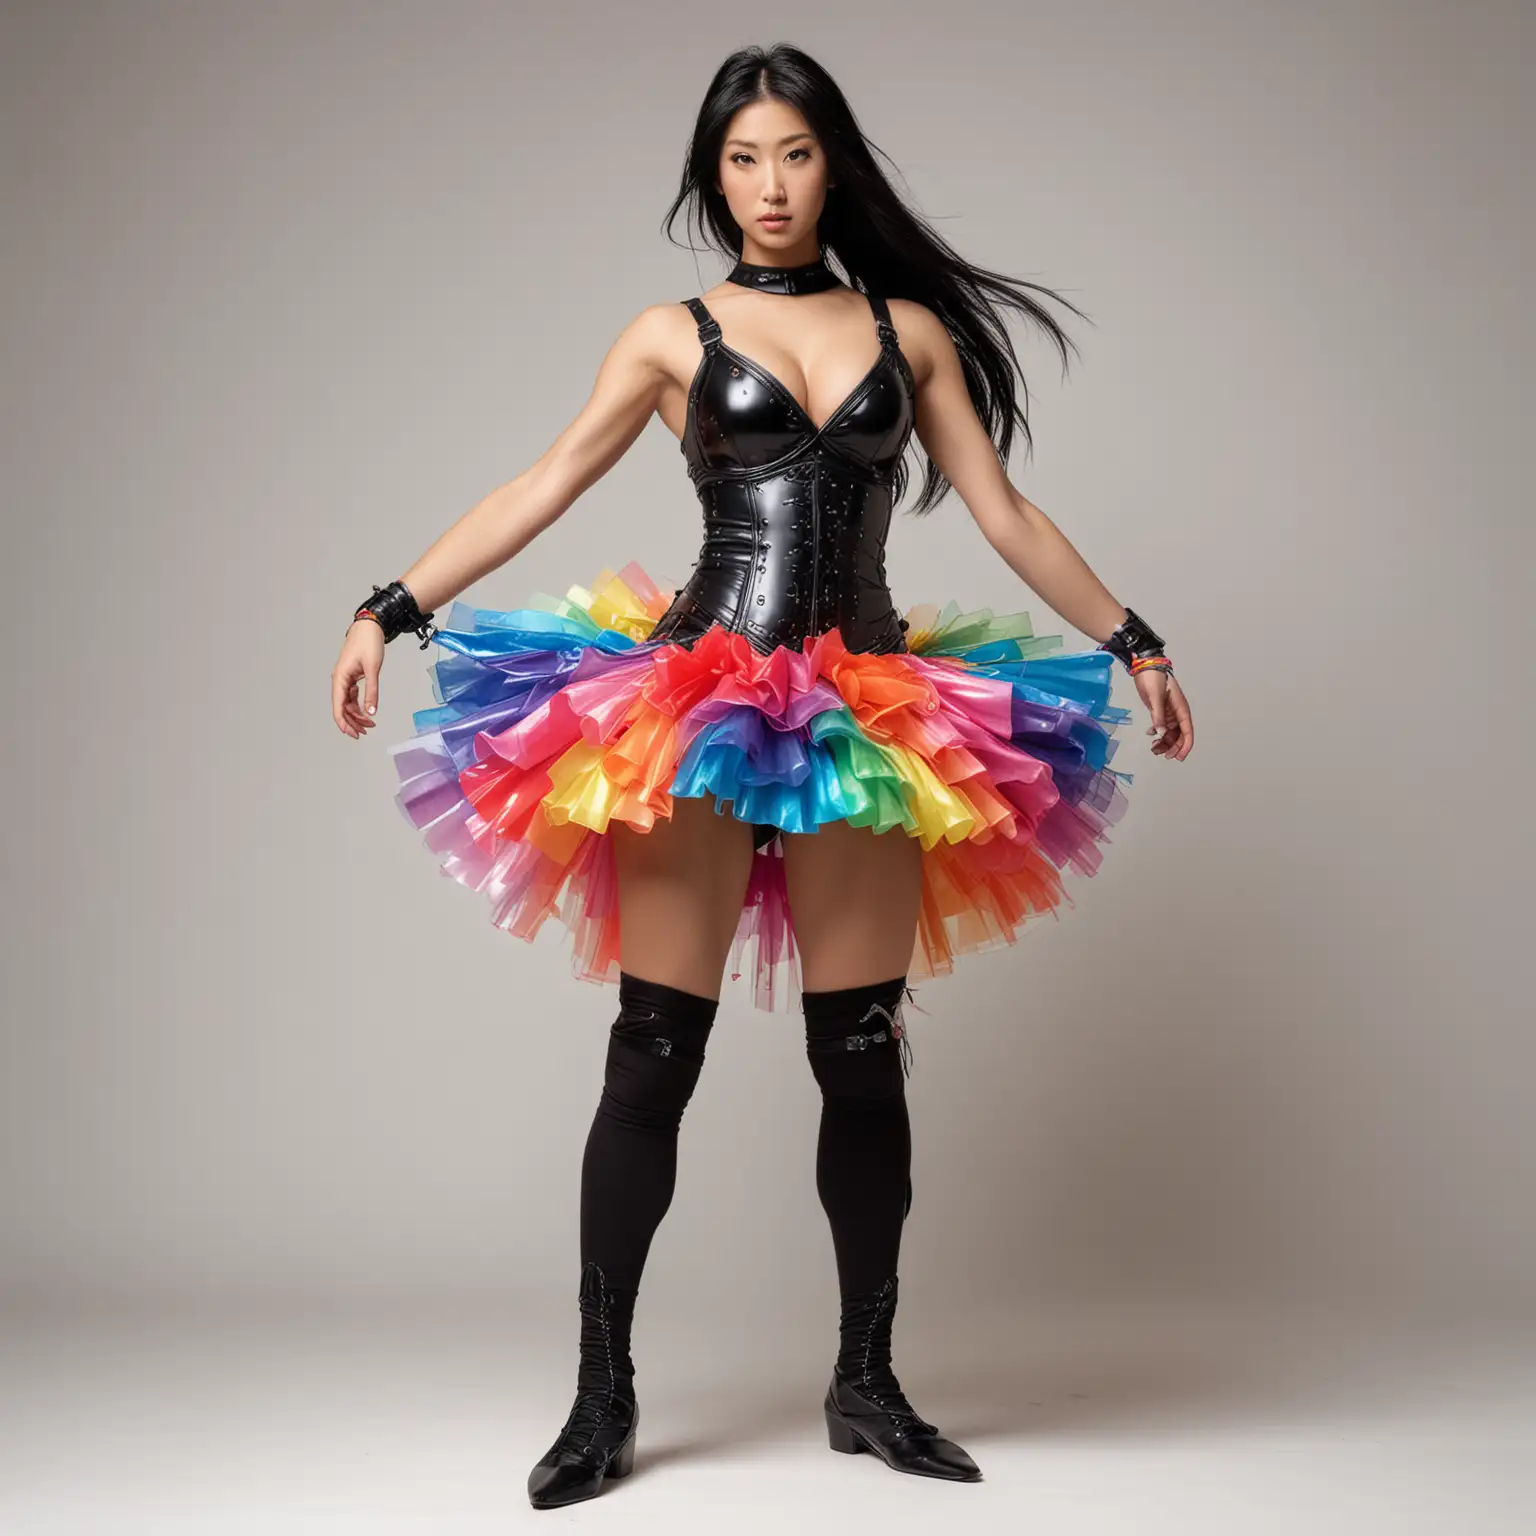 Japanese Supermodel in Samurai Armor and Rainbow Ballerina Tutu